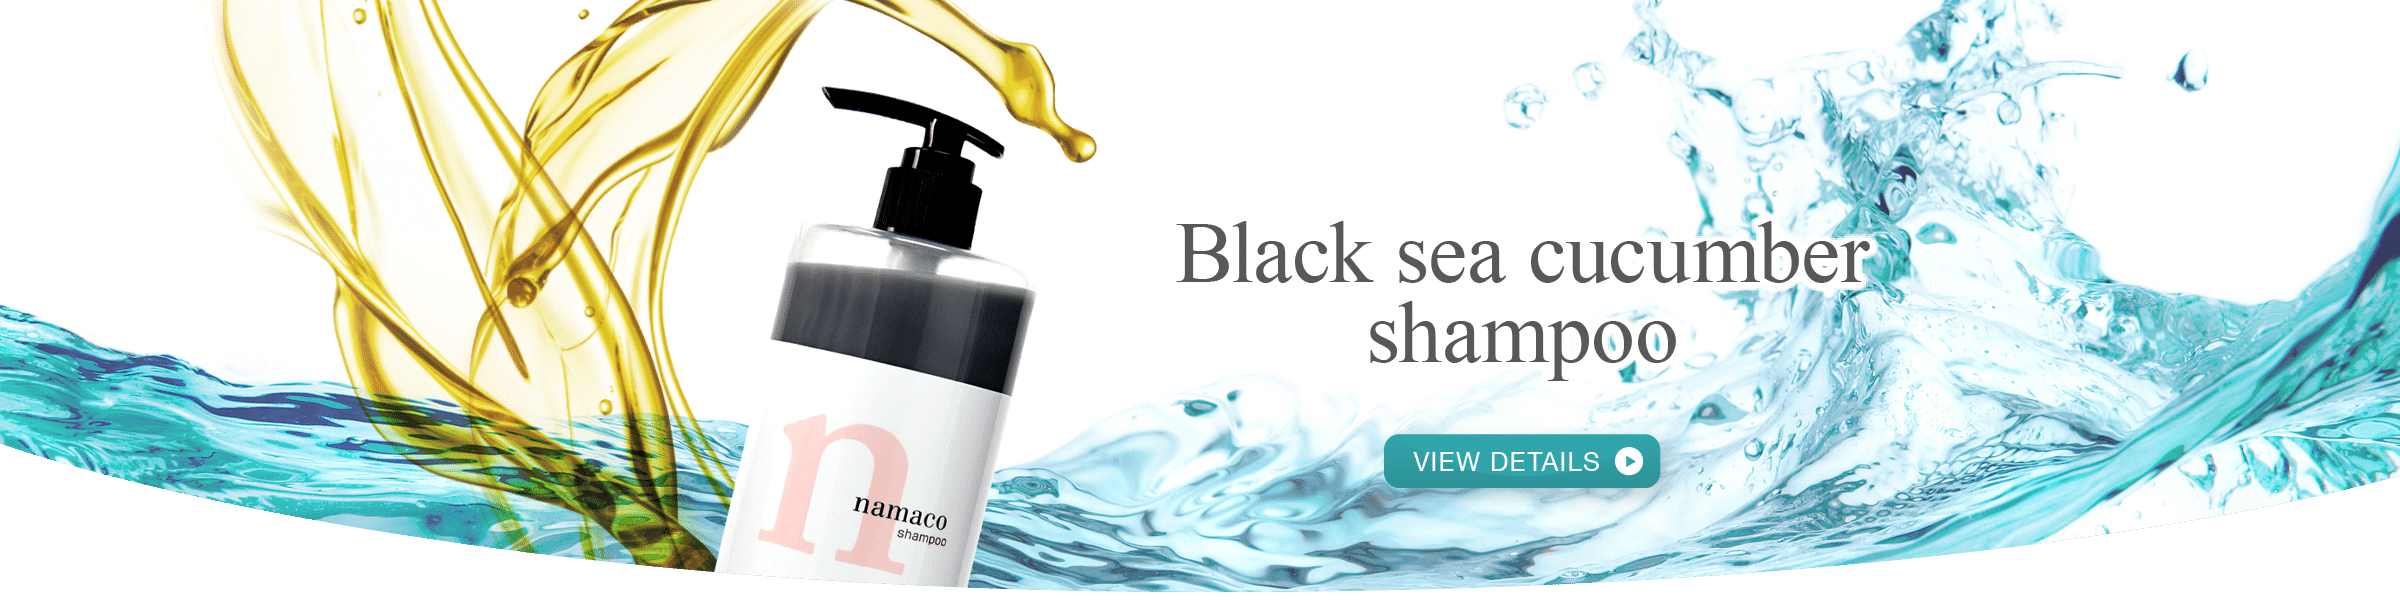 Black sea cucumber shampoo